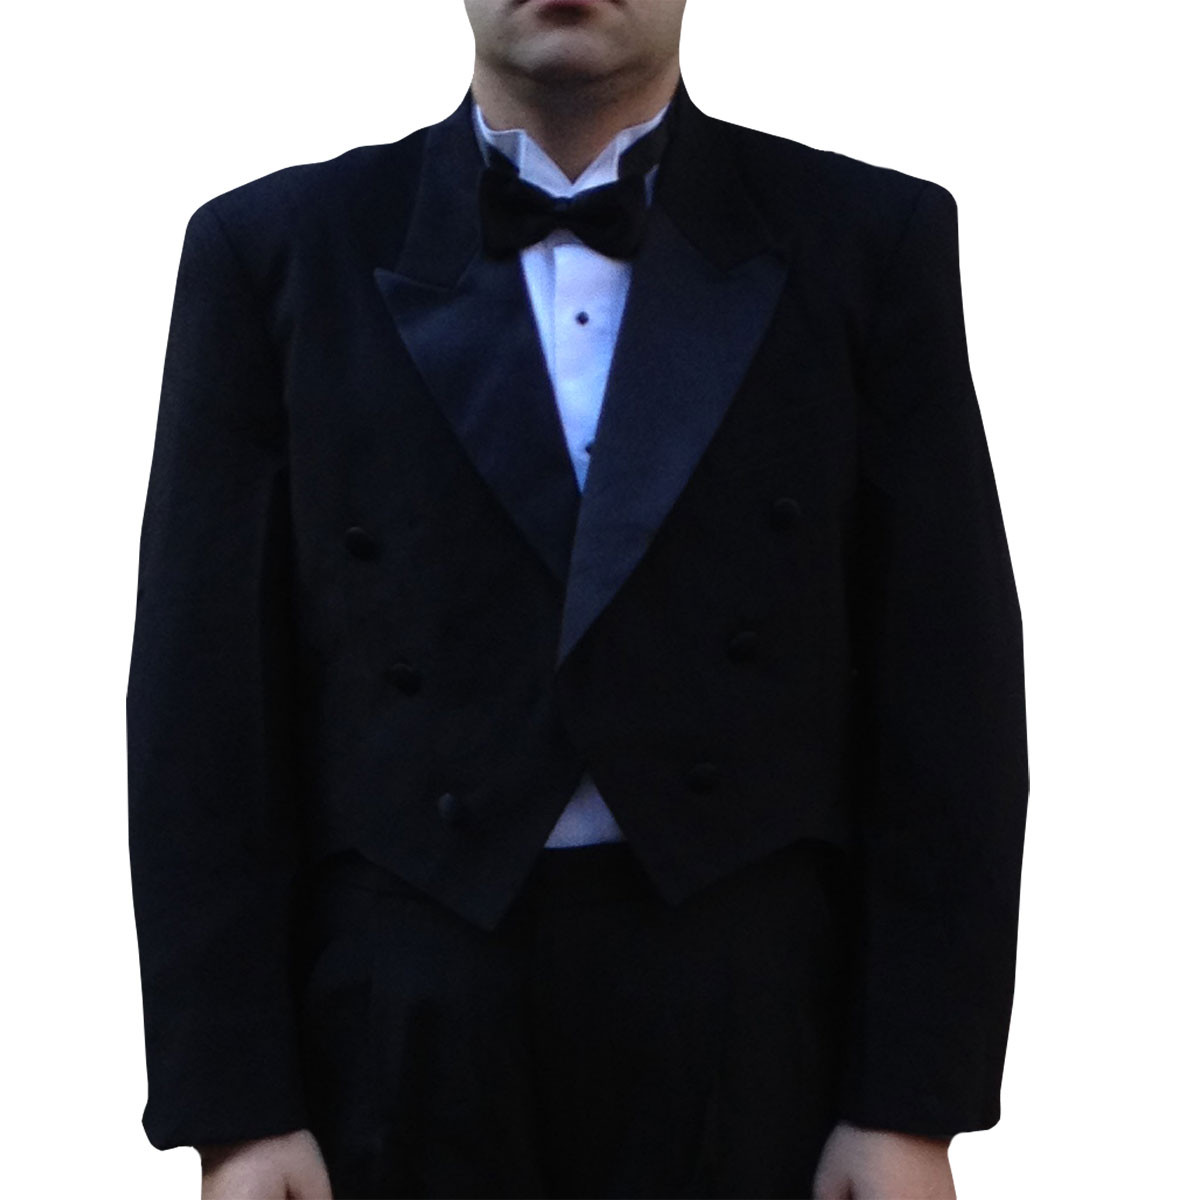 Men's Tuxedo Tailcoat with Peak Collar